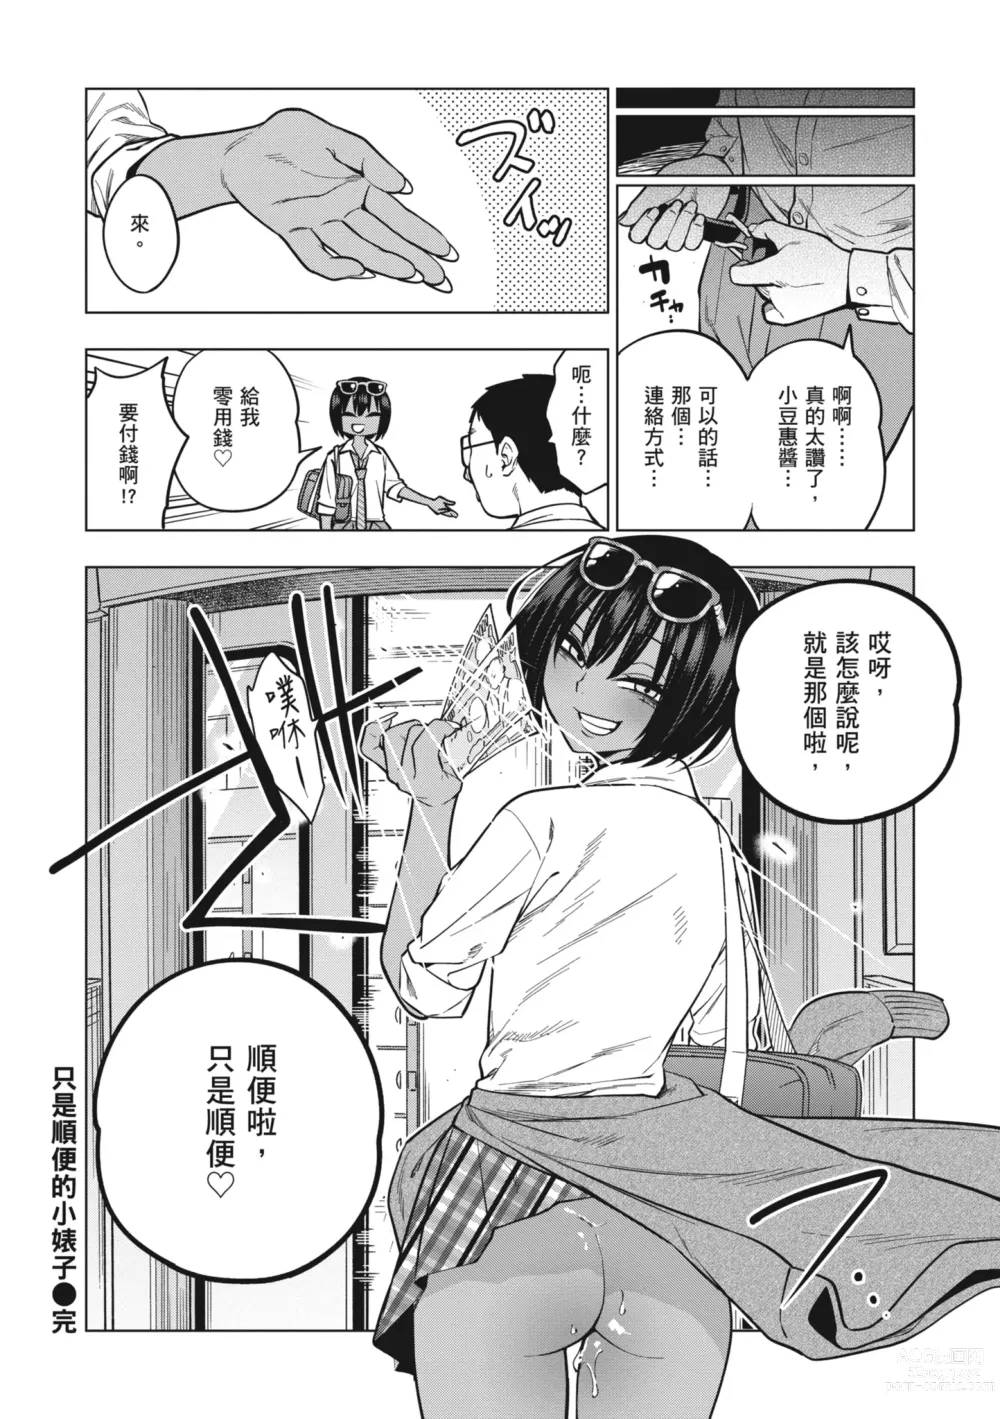 Page 32 of manga Fxxk Street Girls (decensored)